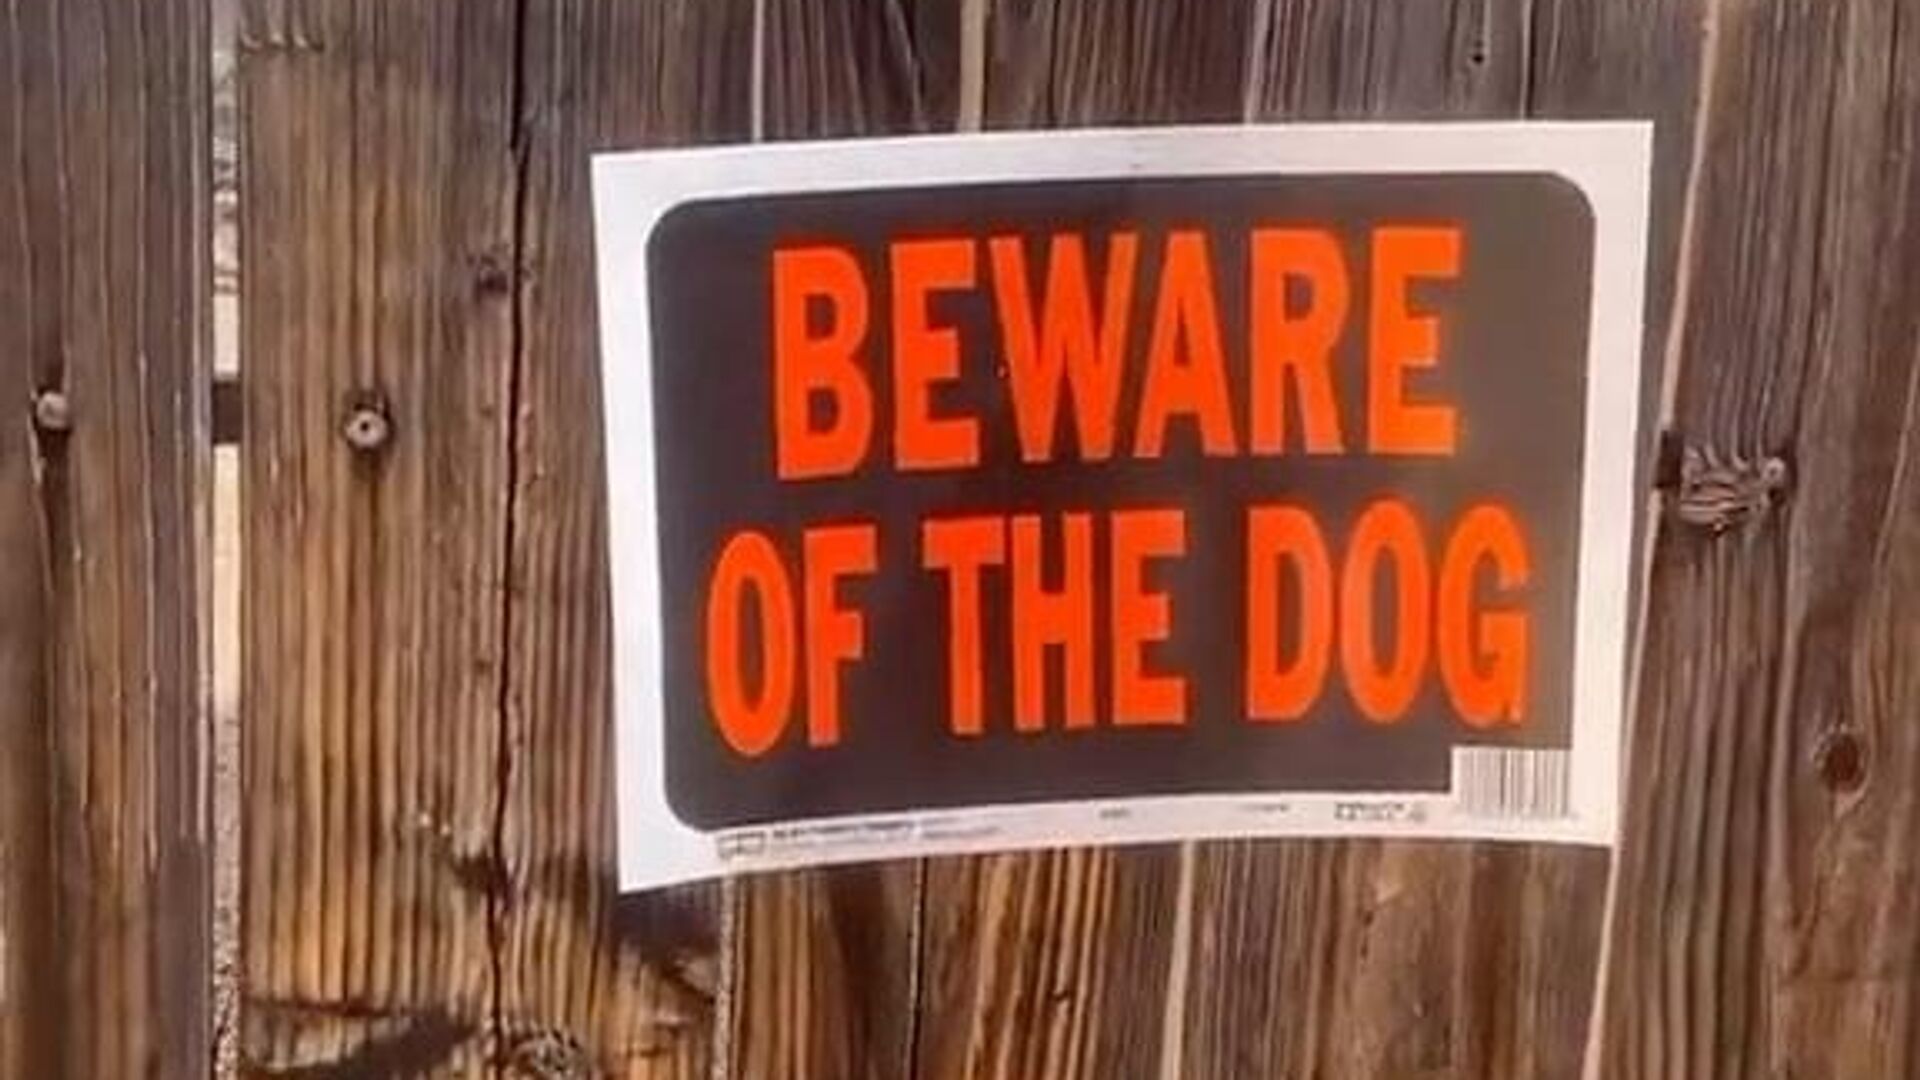 Beware of the dogs - Sputnik International, 1920, 14.09.2021